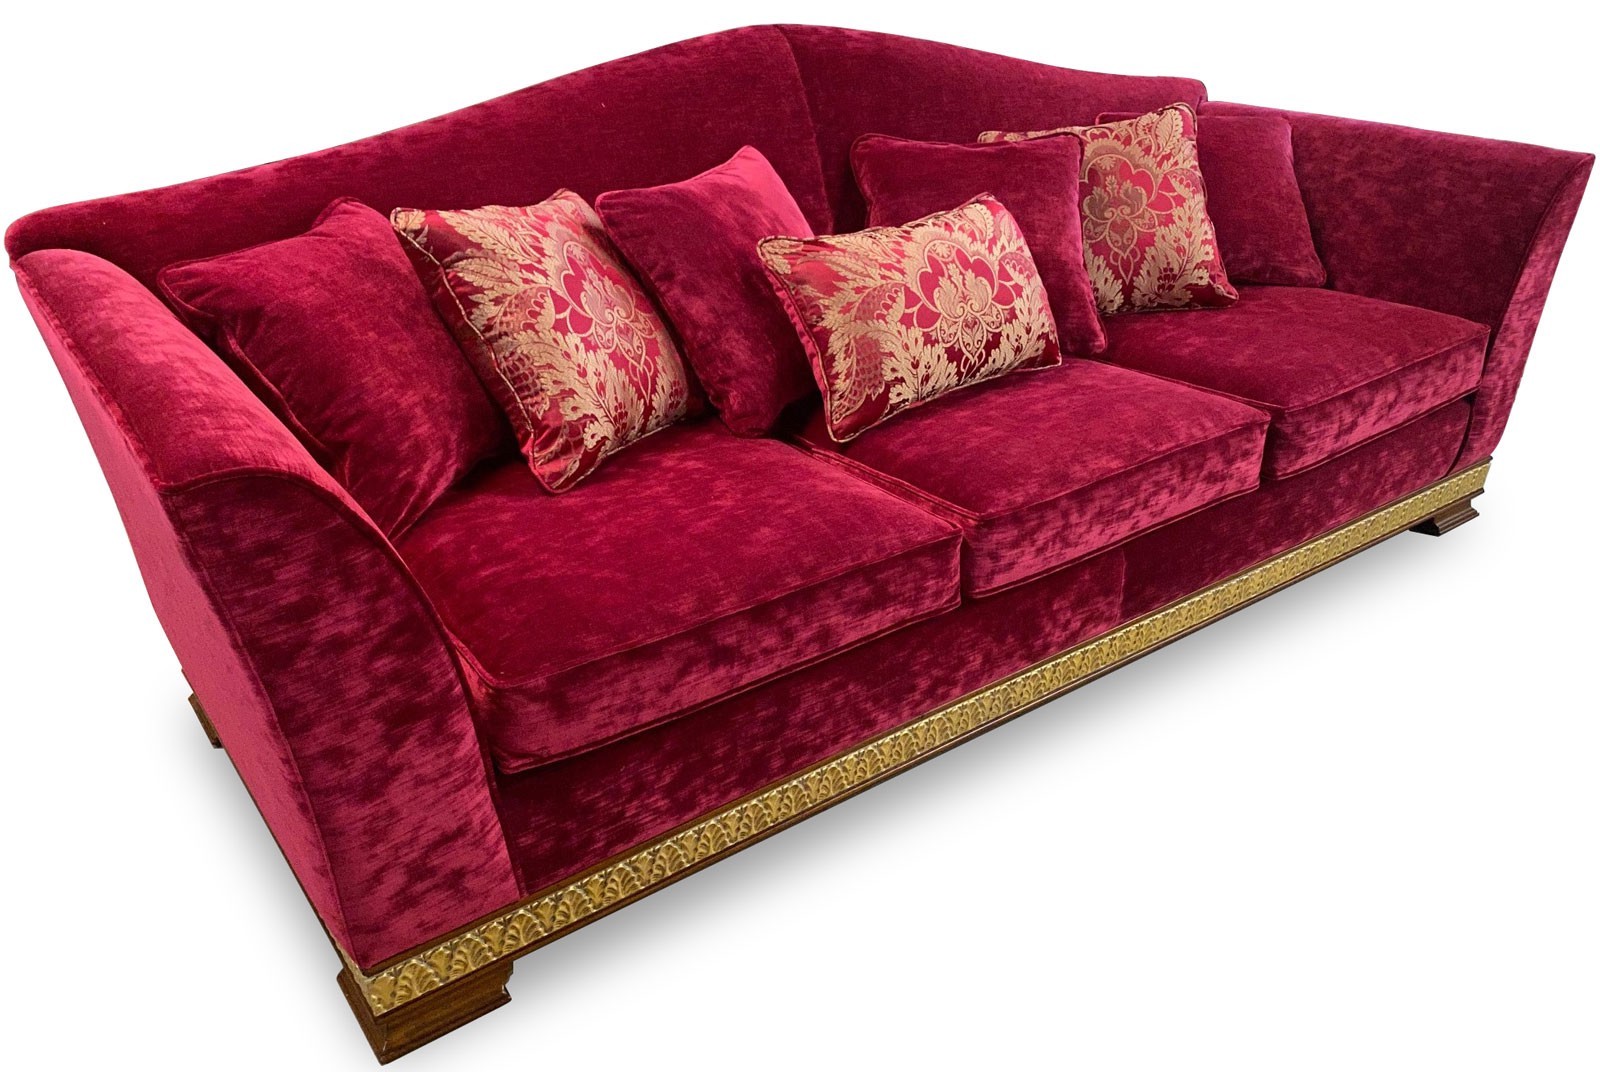 Luxury baroque furniture